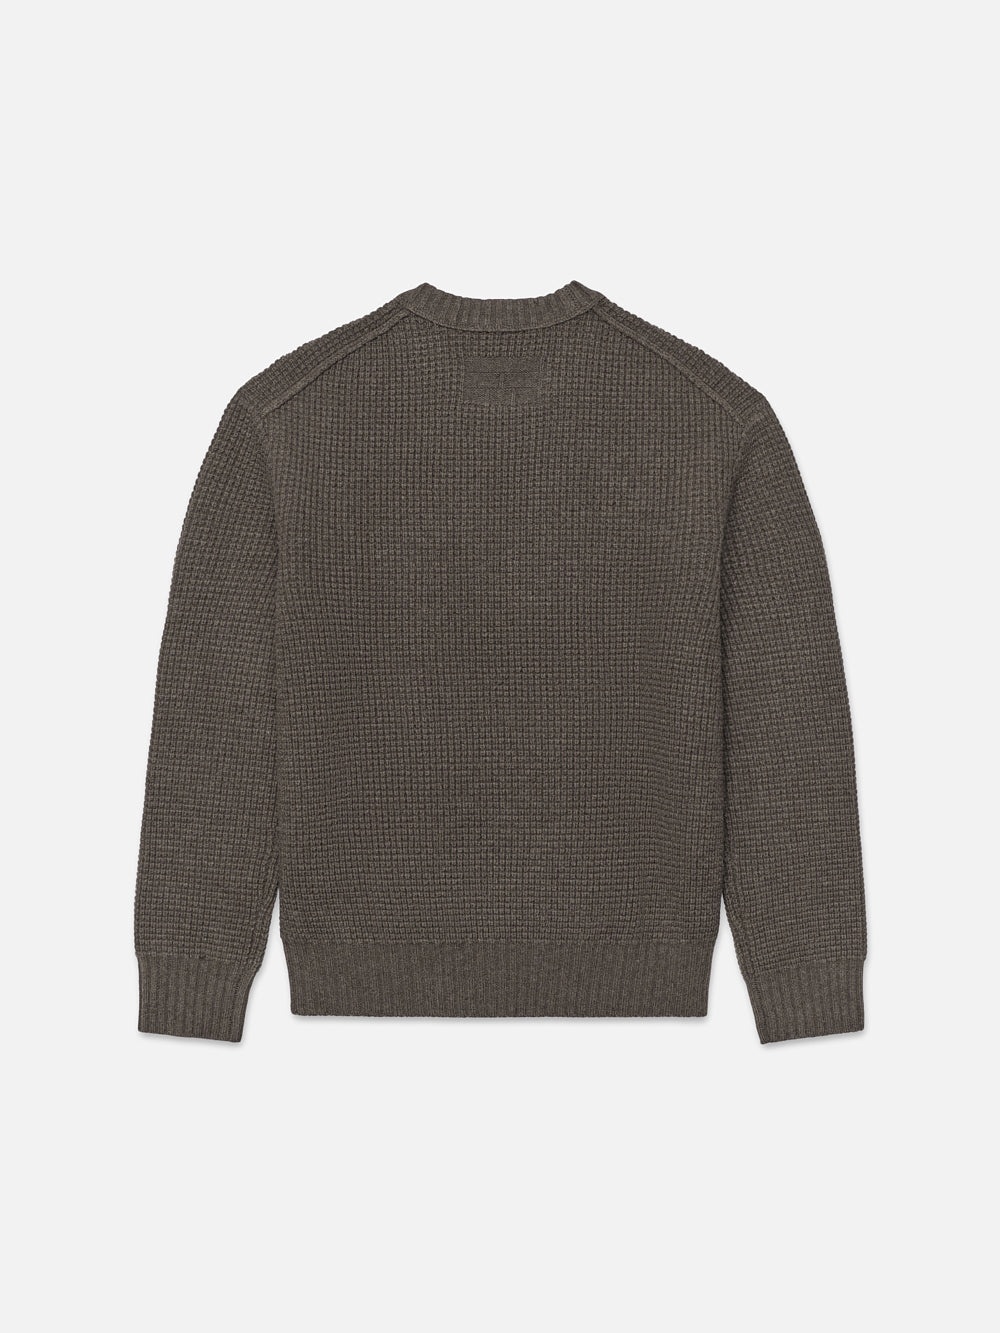 Wool Crewneck Sweater in Mole - 3